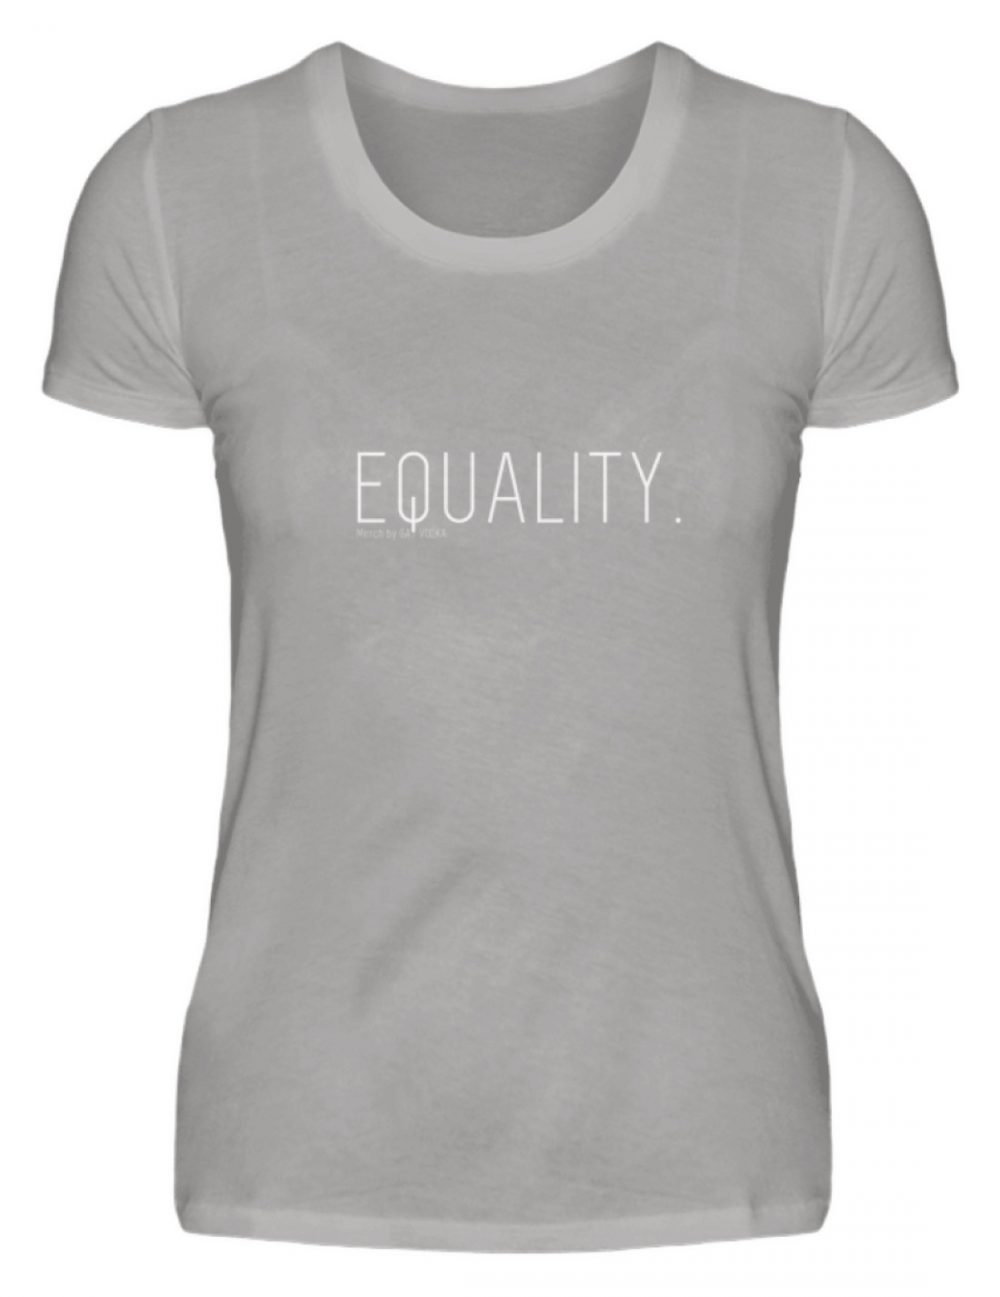 EQUALITY. - Damen Premiumshirt-2998